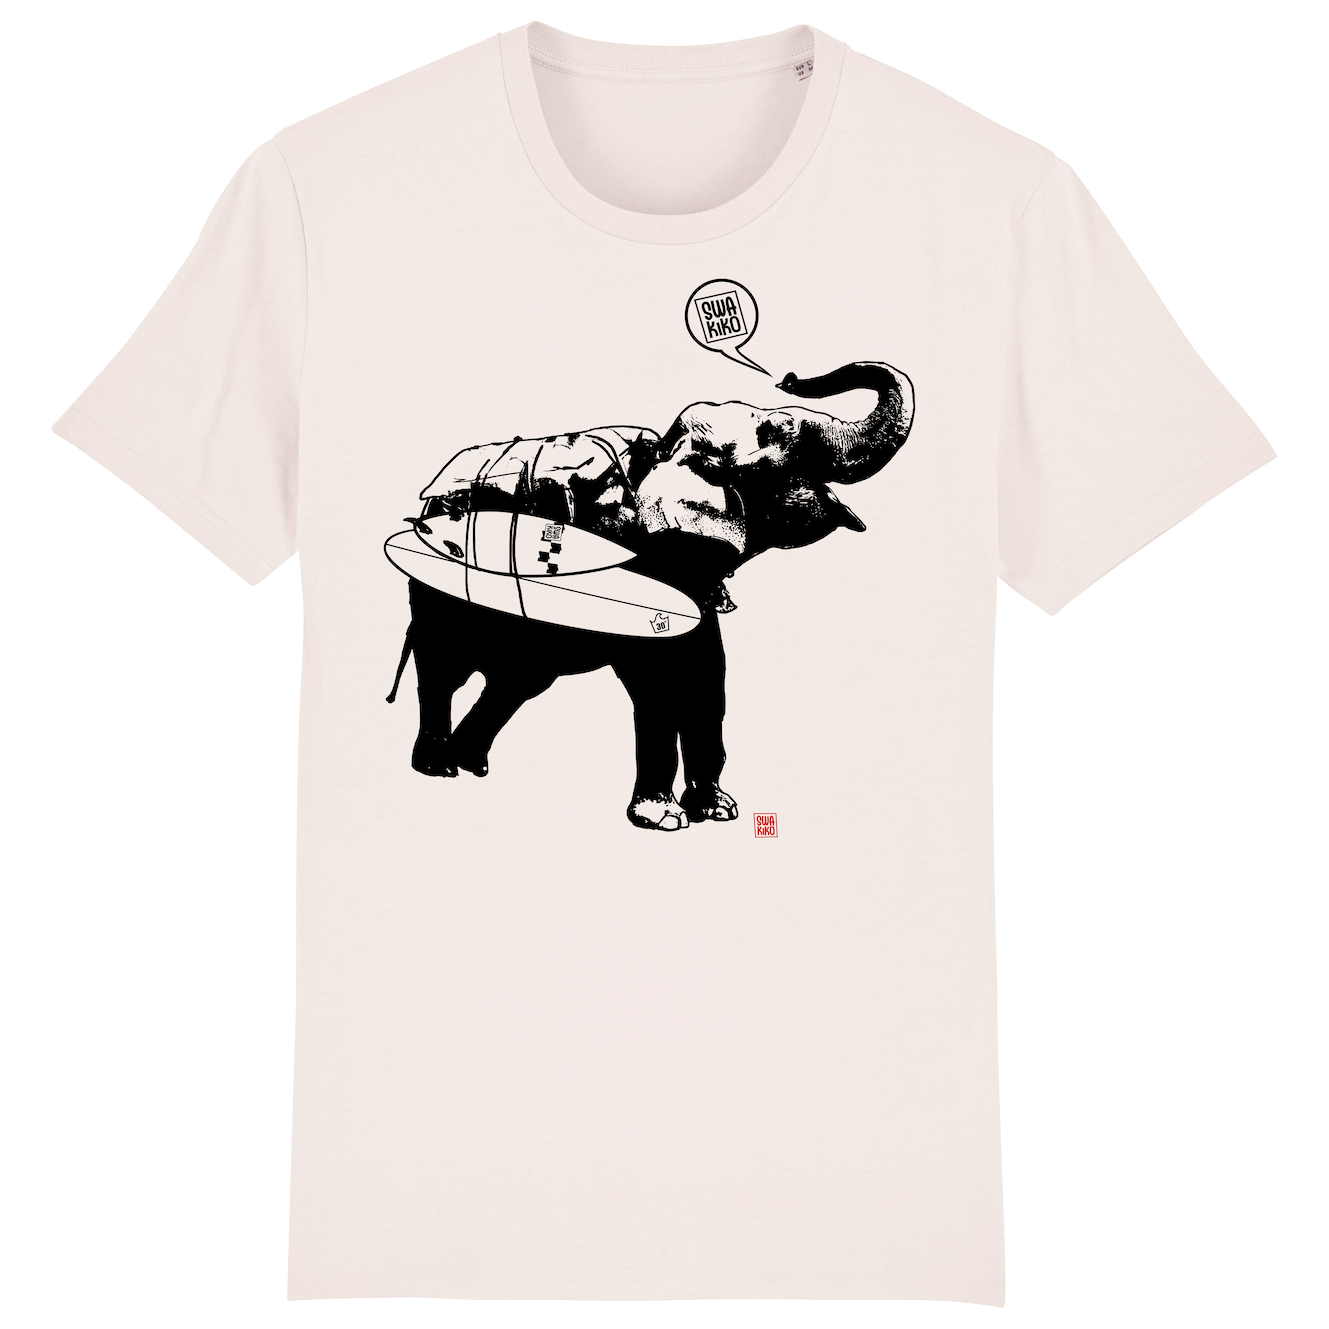 Surf t-shirt men white, Elephant